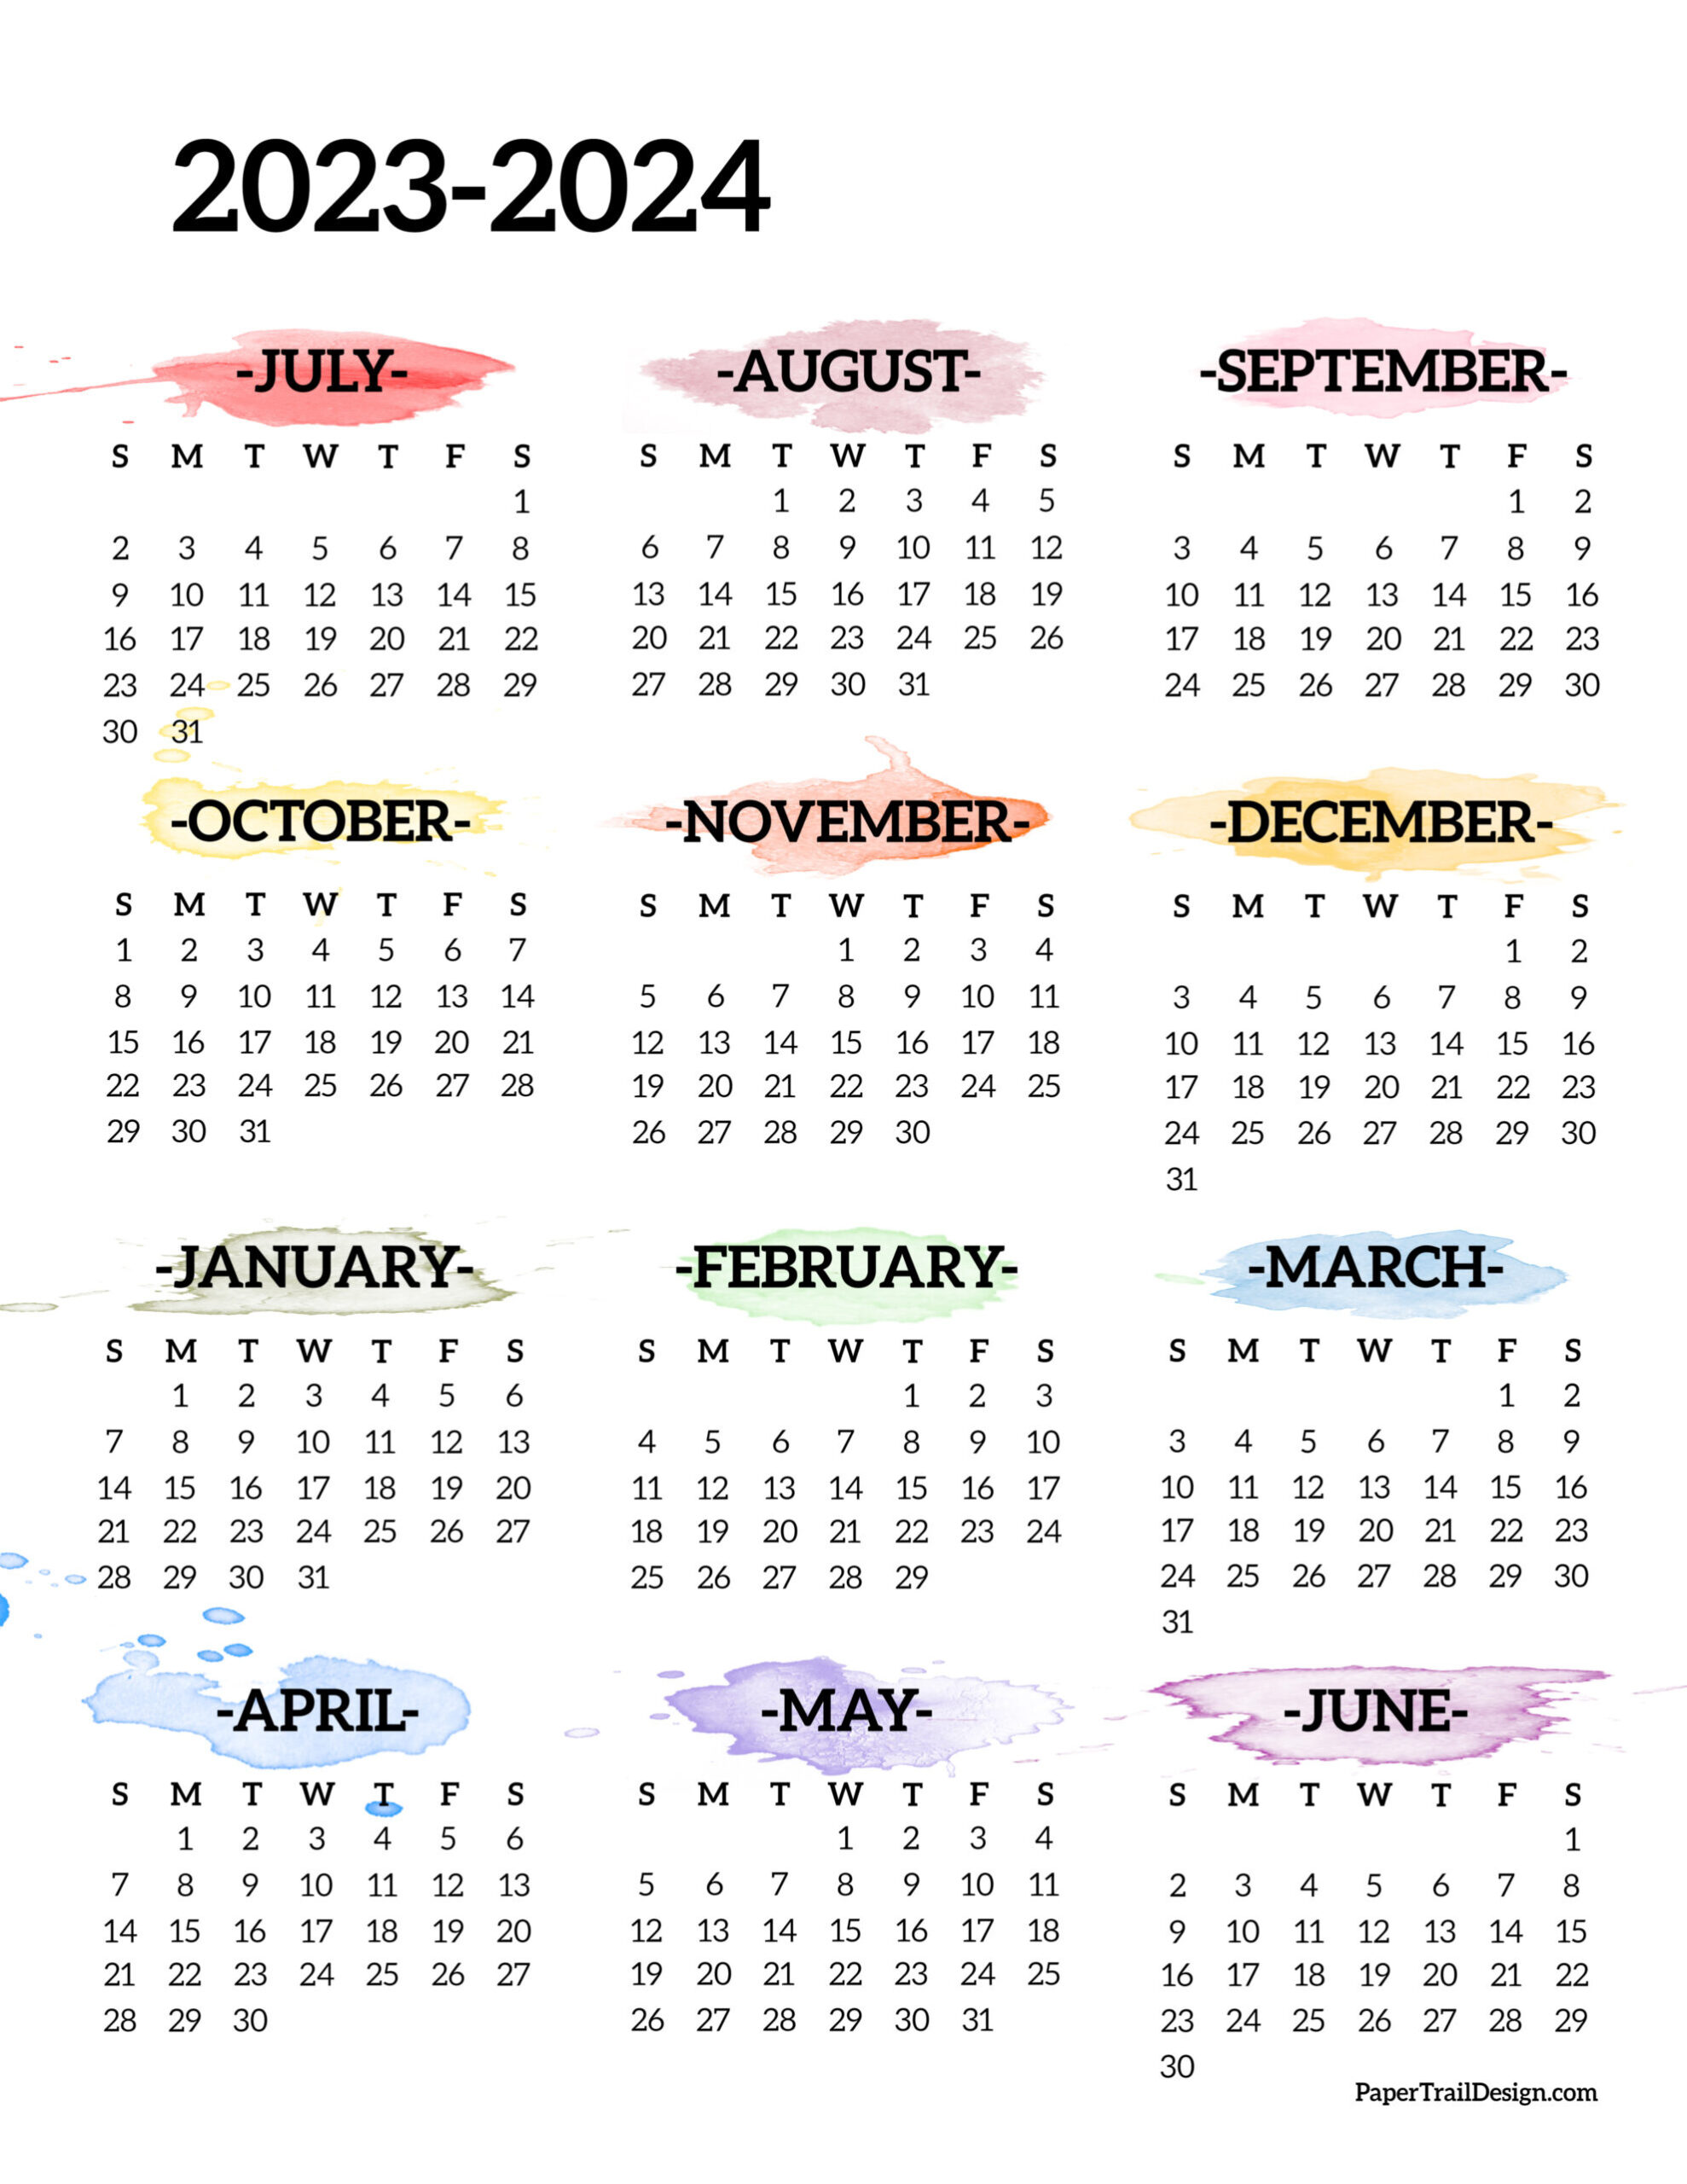 2023-2024 School Year Calendar Free Printable - Paper Trail Design inside Calendar August 2023-June 2024 Printable